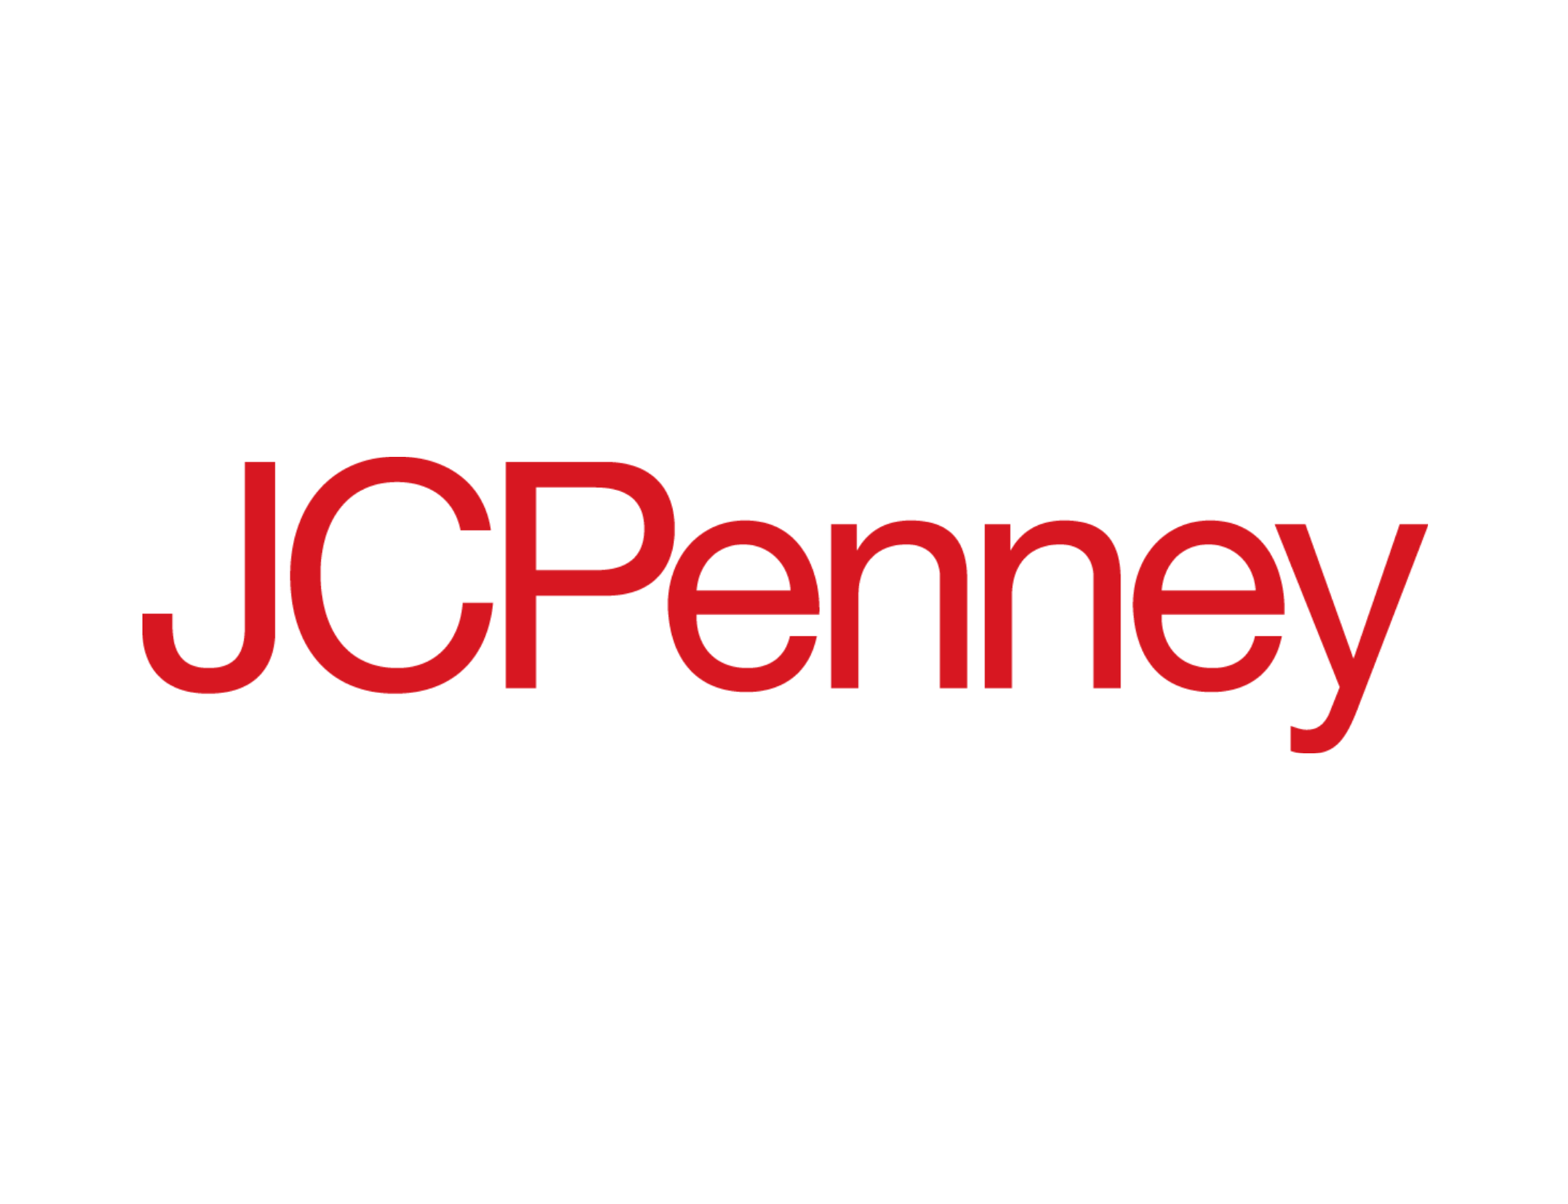 Jcpenney.com Logo - View Employer | StyleCareers.com